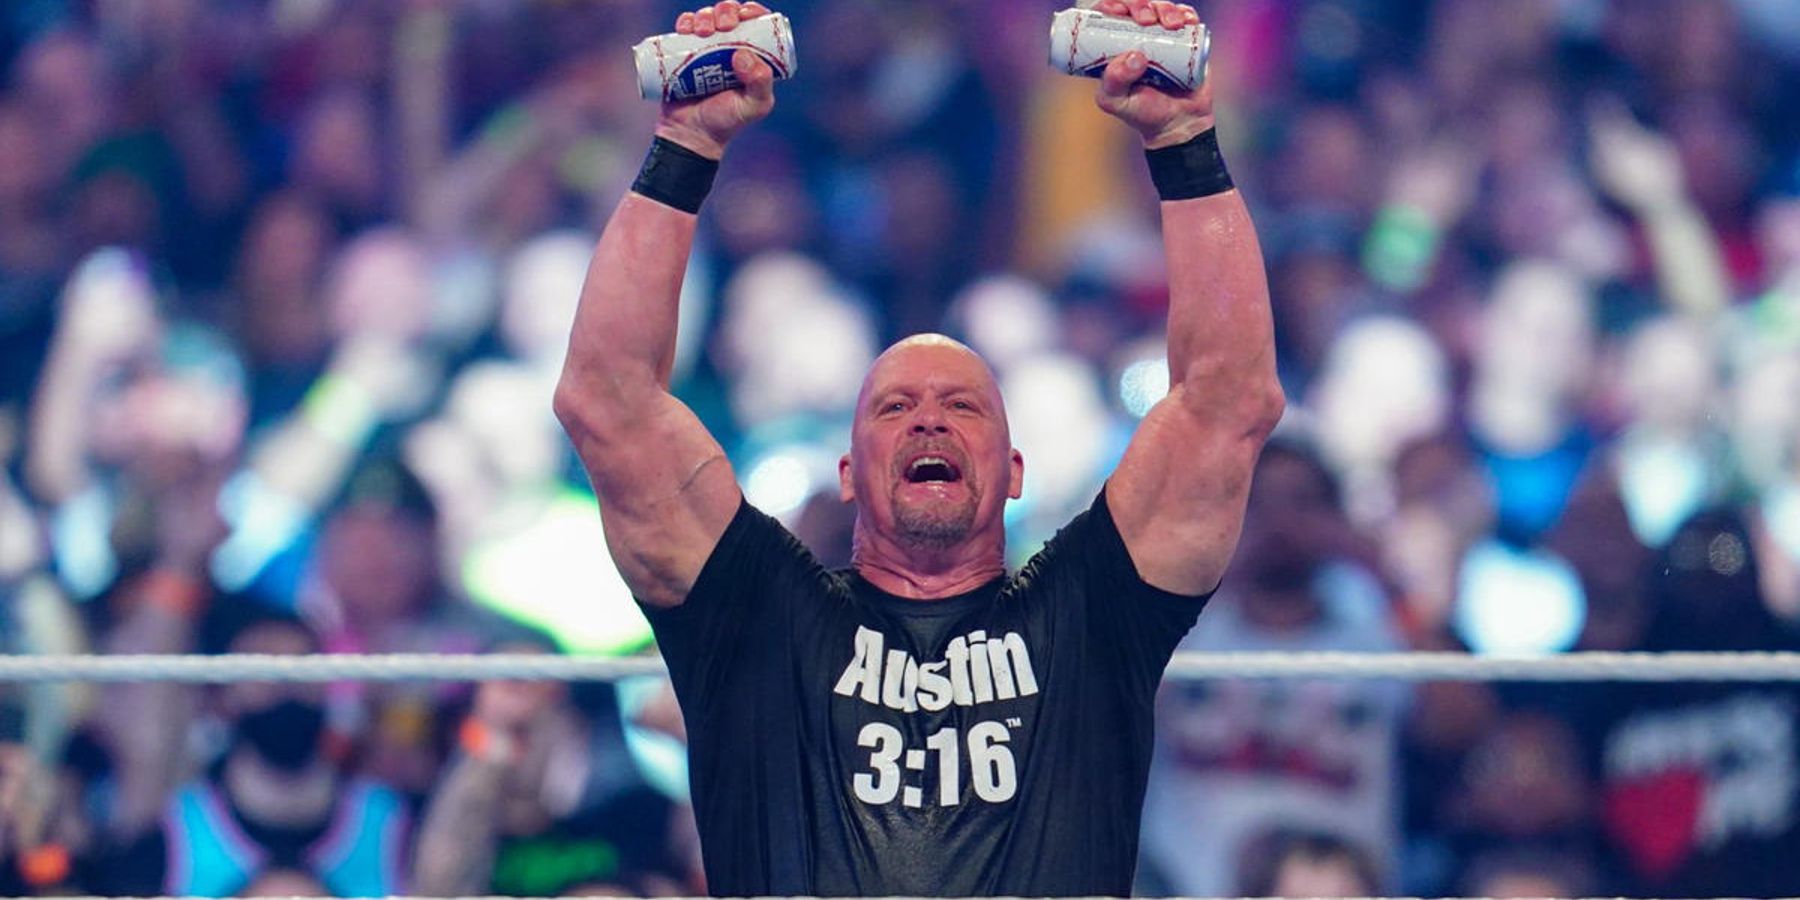 Stone Cold Steve Austin comemora após sua vitória sobre Kevin Owens na WrestleMania 38.